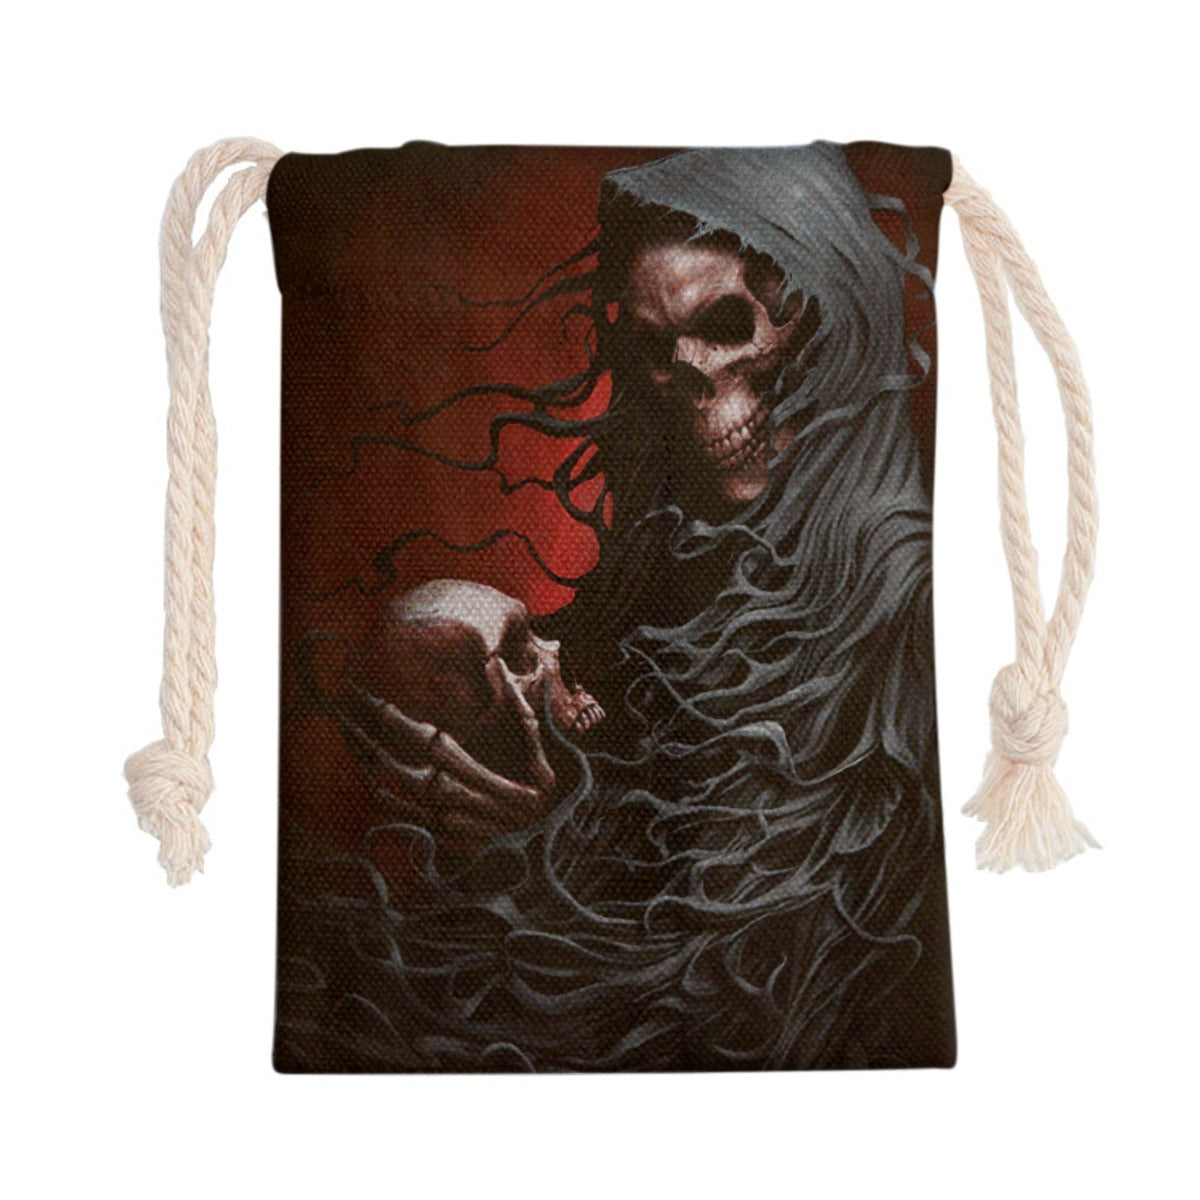 Grim reaper gothic Drawstring Bag, Halloween horror skull skeleton handbag shoulder bag purse